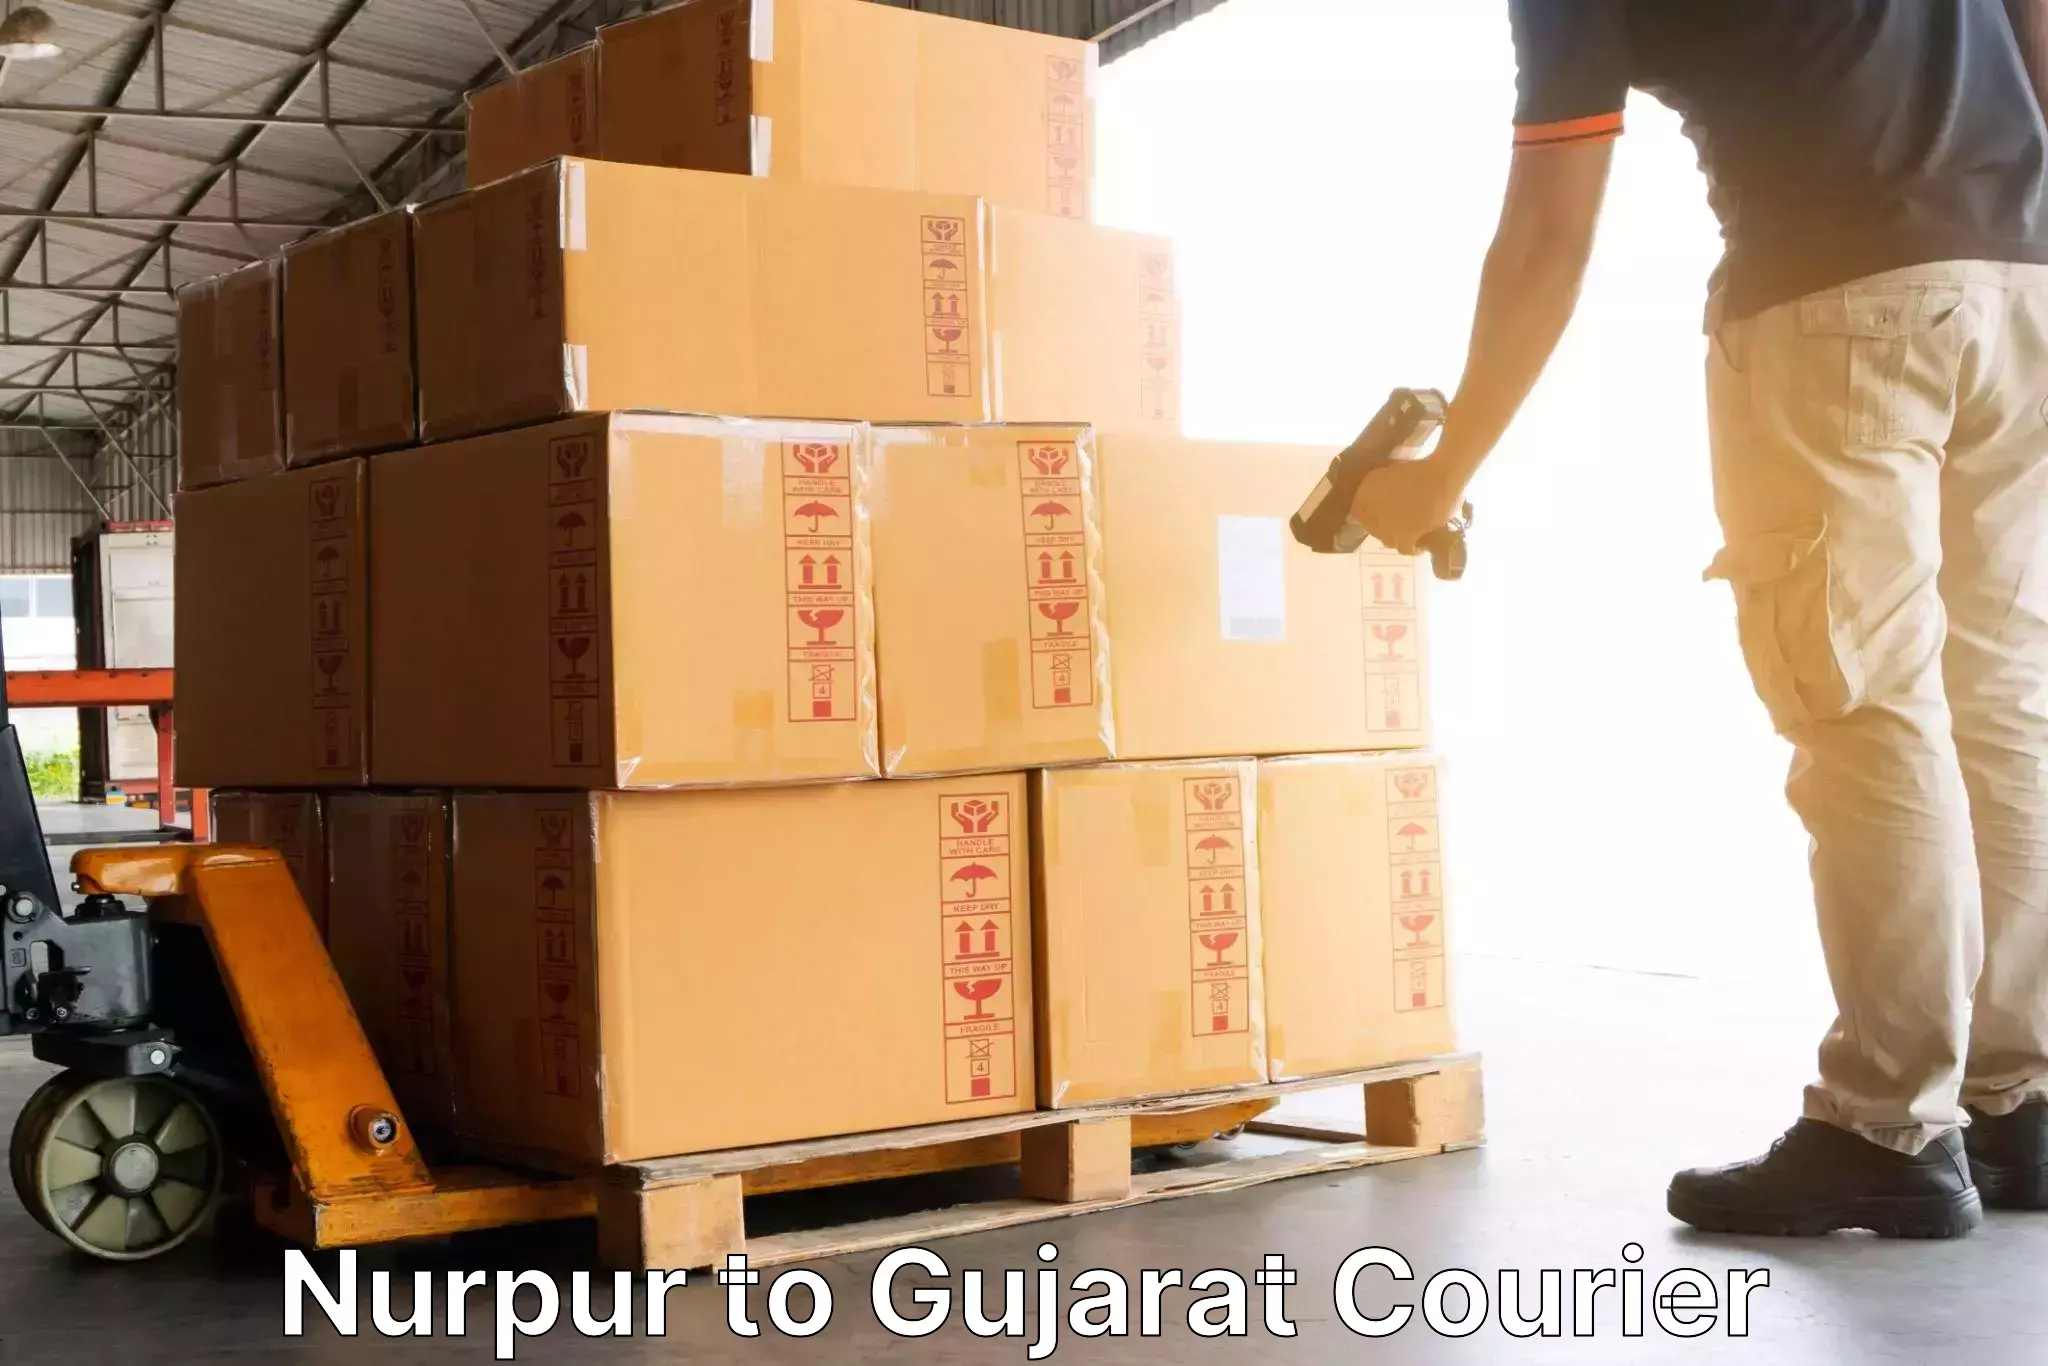 Courier service comparison Nurpur to Mahuva